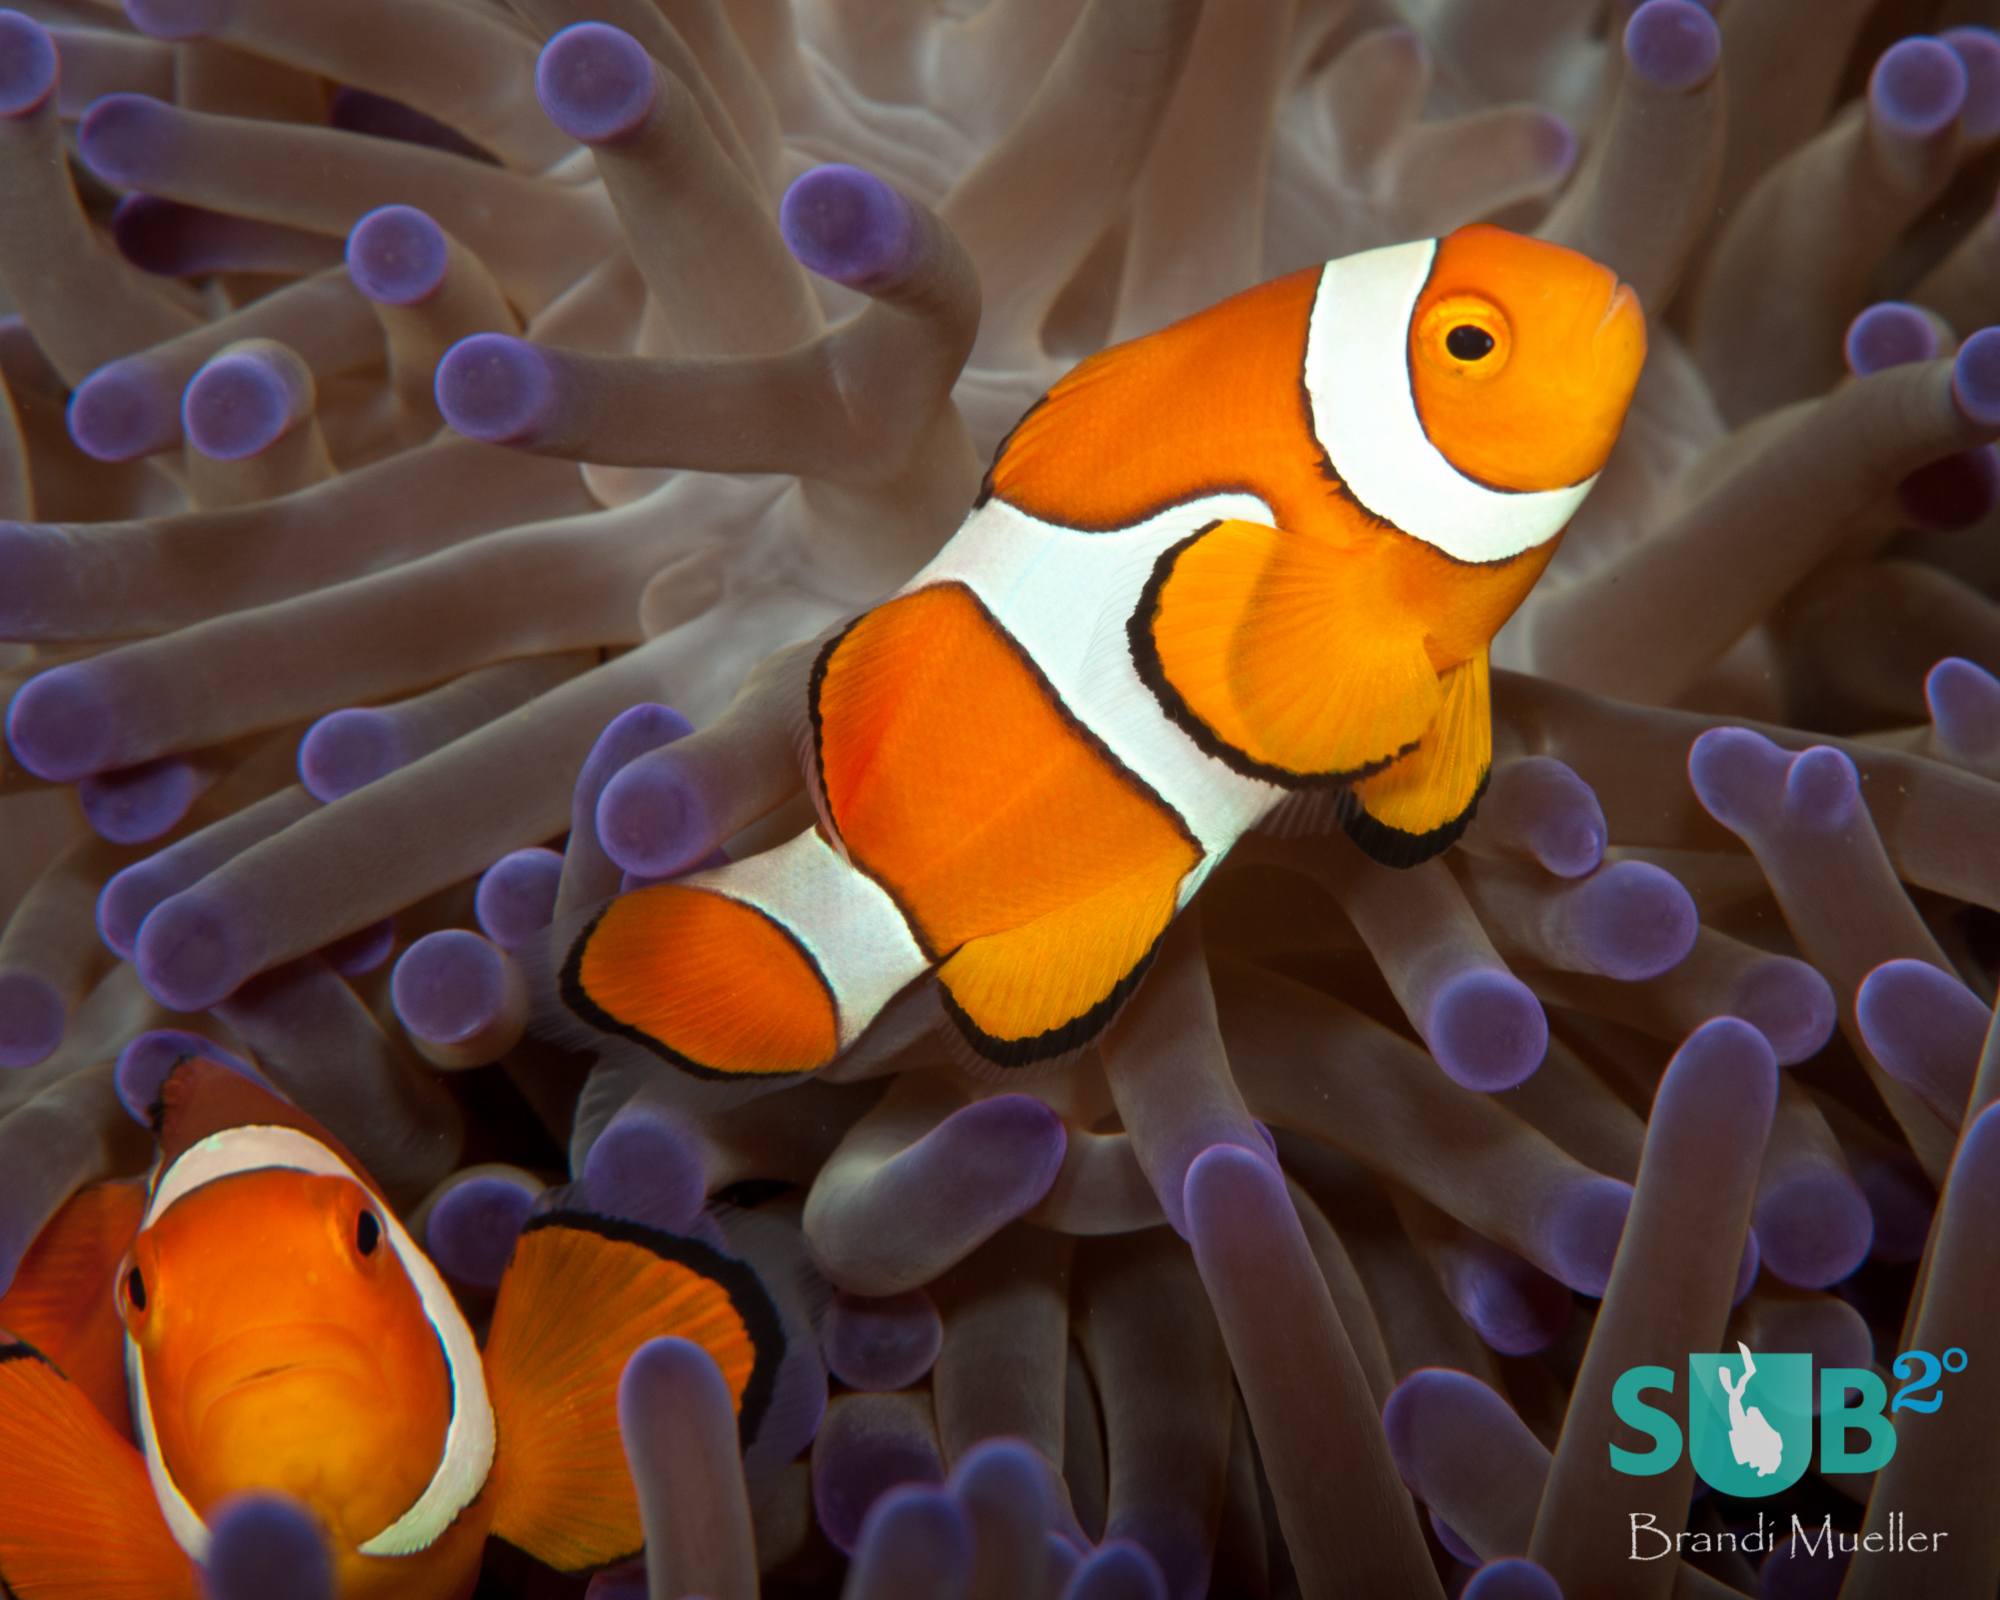 A bright purple anemone is home to fluorescent orange false clownfish.